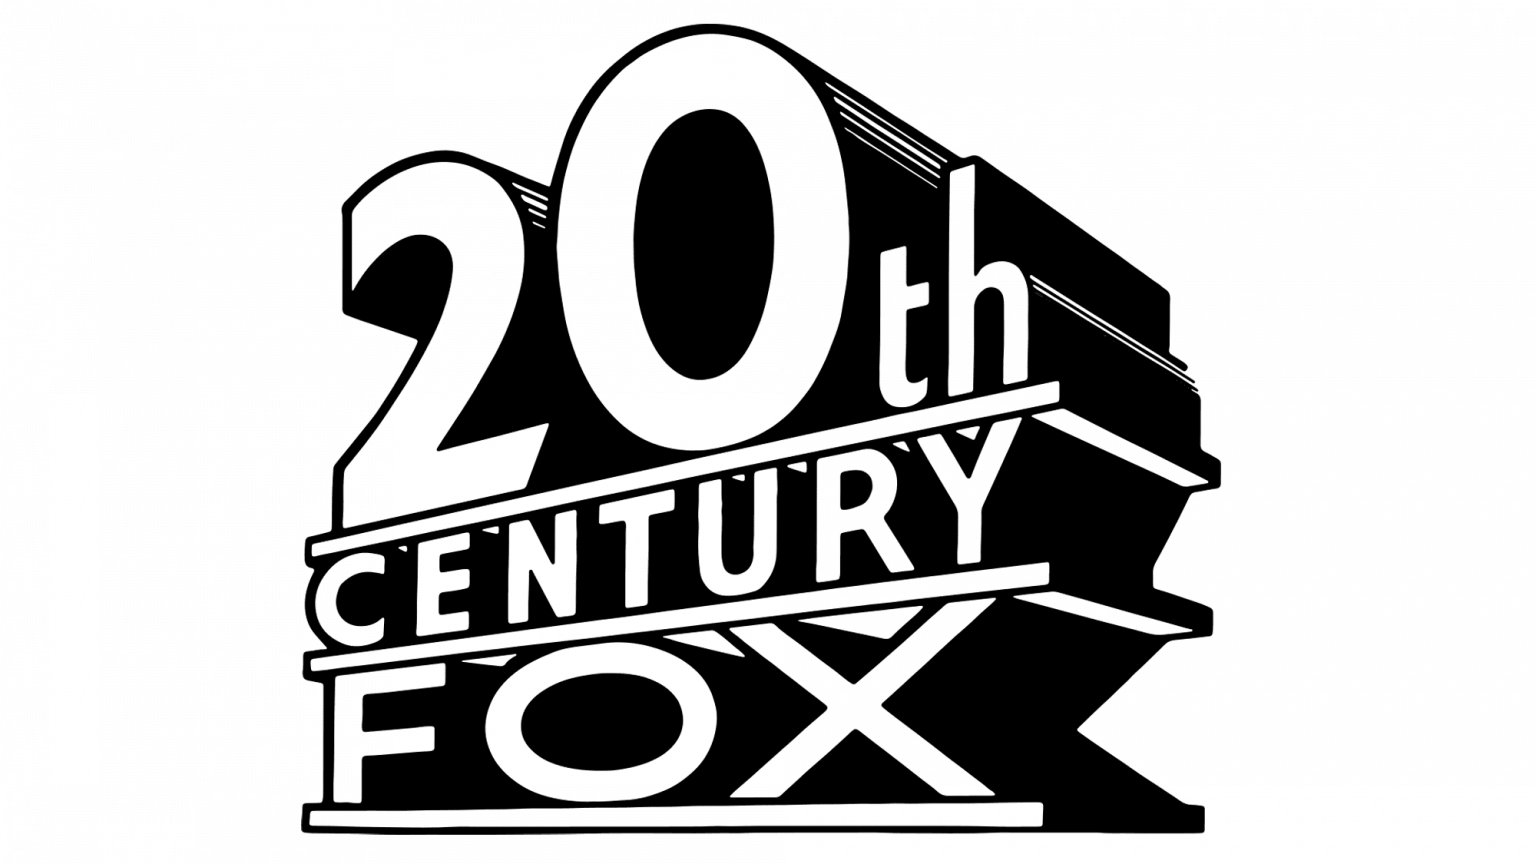 Заставка fox. 20 Century Fox logo. 20 Век Фокс 1935. 20th Century Fox 1. 20th Century Fox logo 1935.